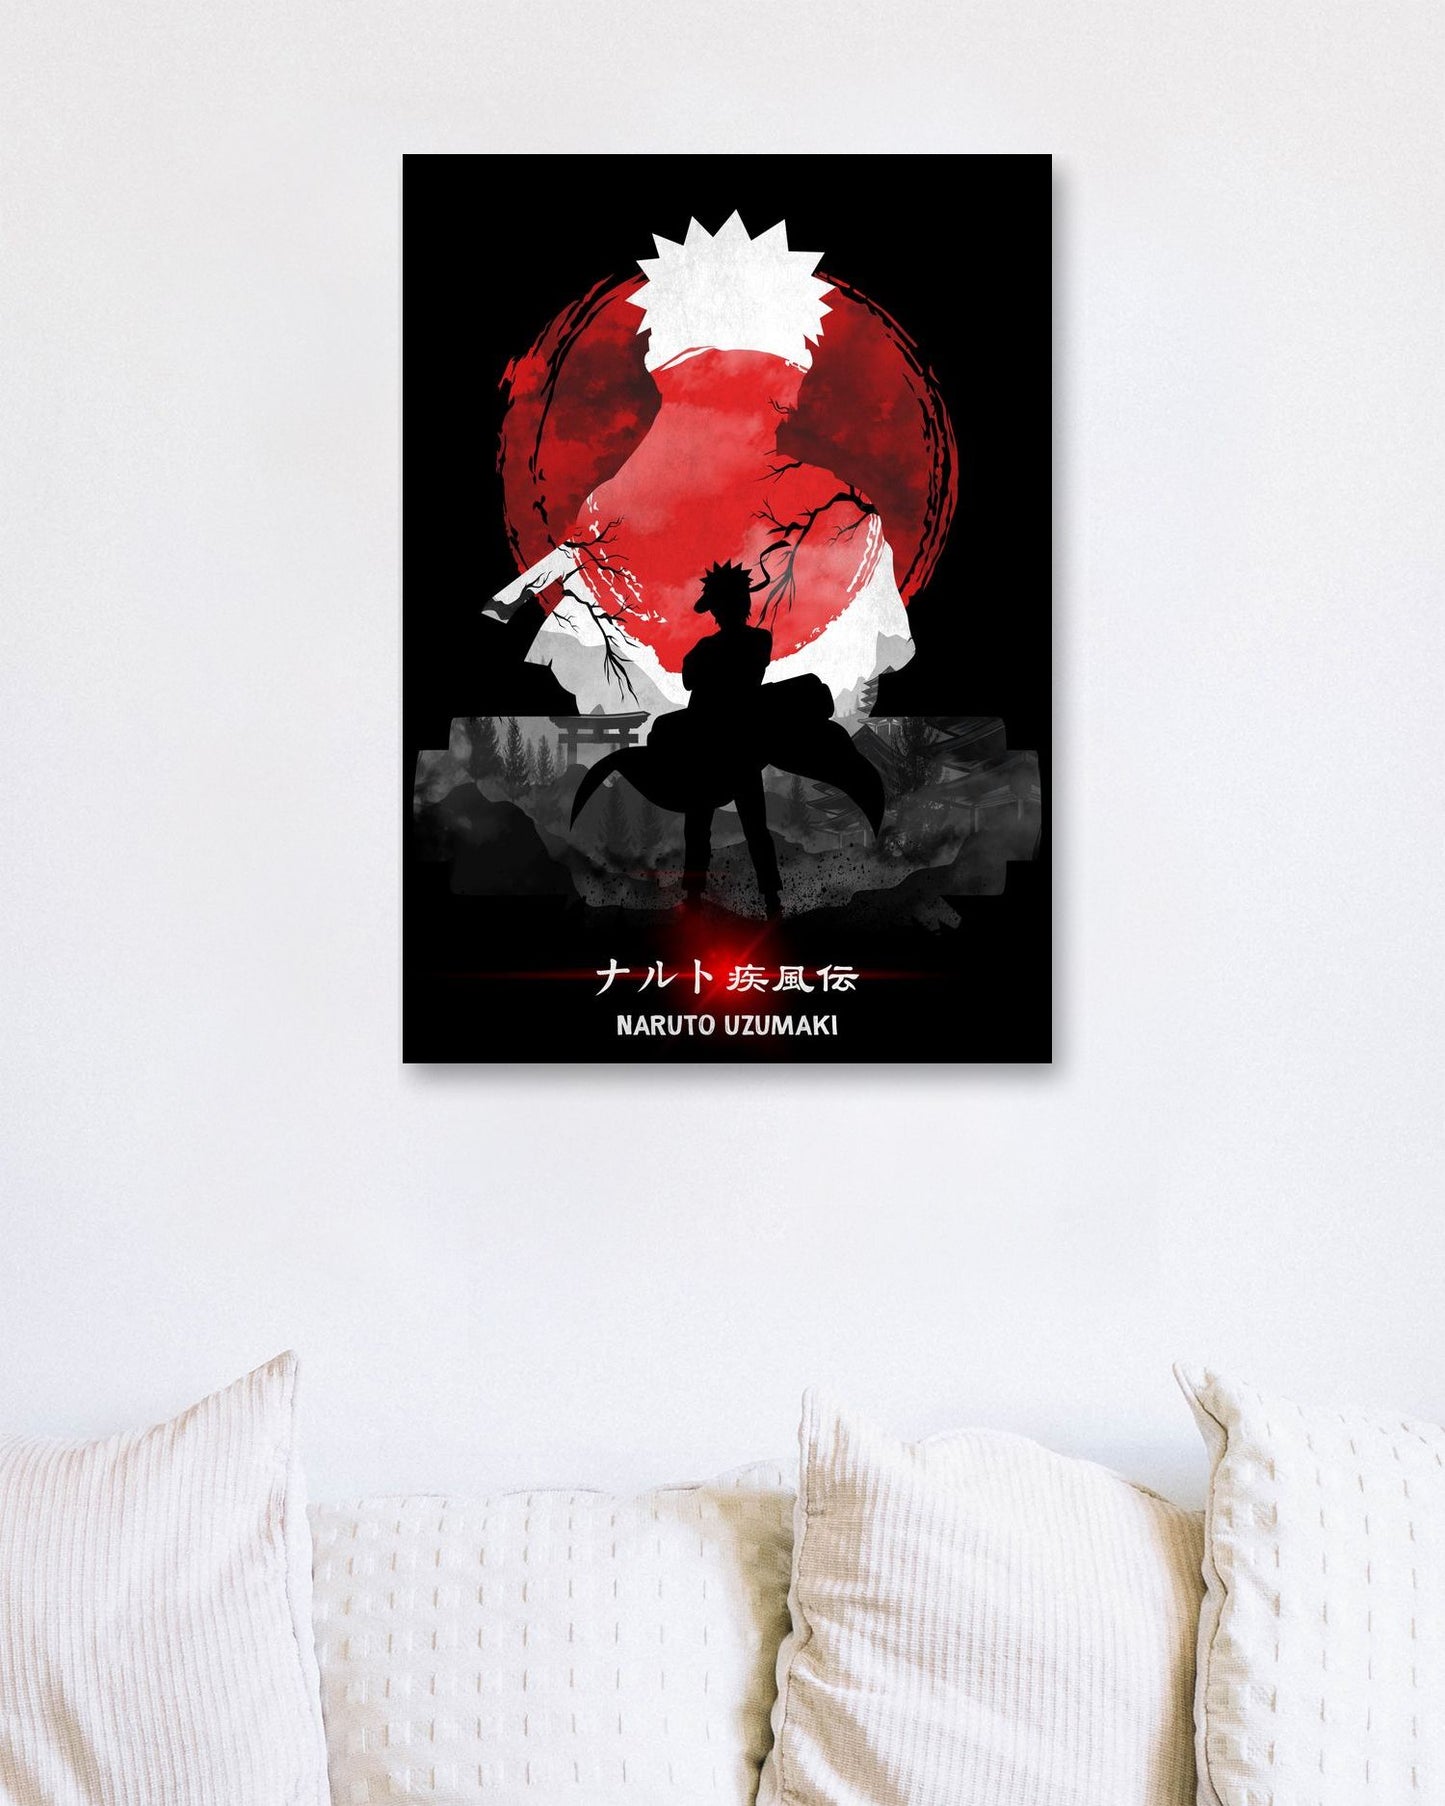 Naruto the savior of the world - @UciStudio